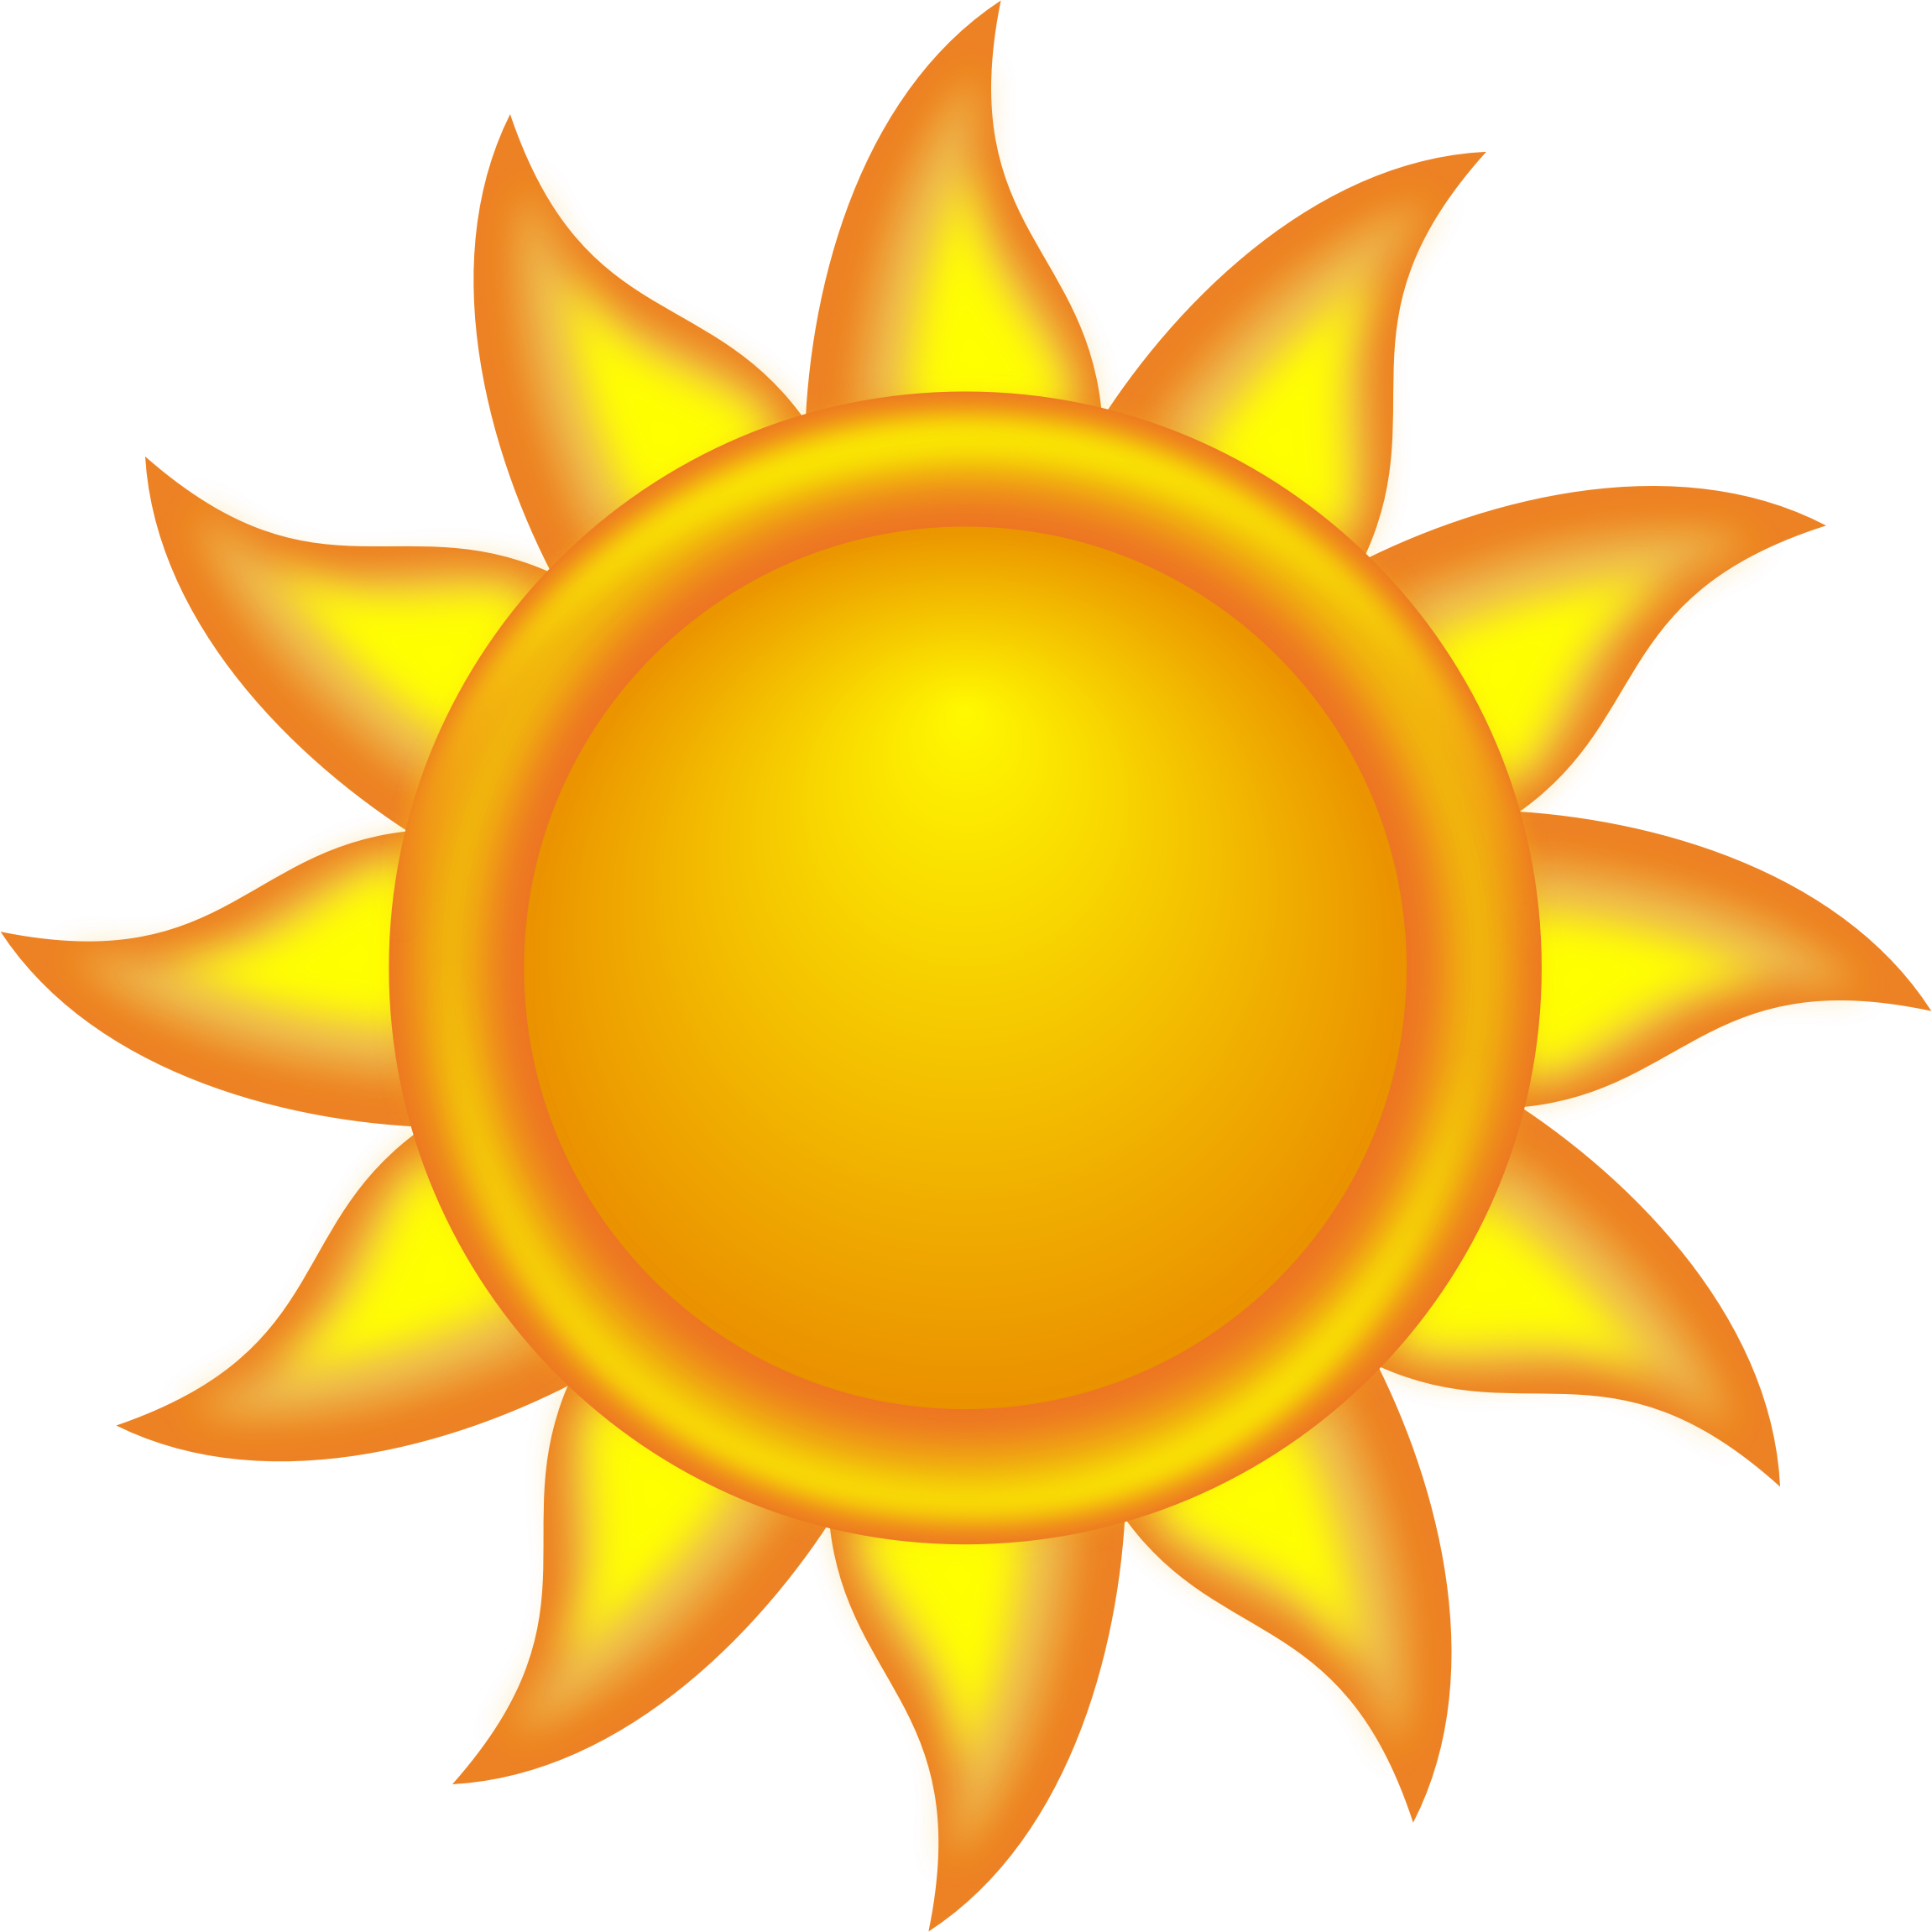 Skin sun exposure